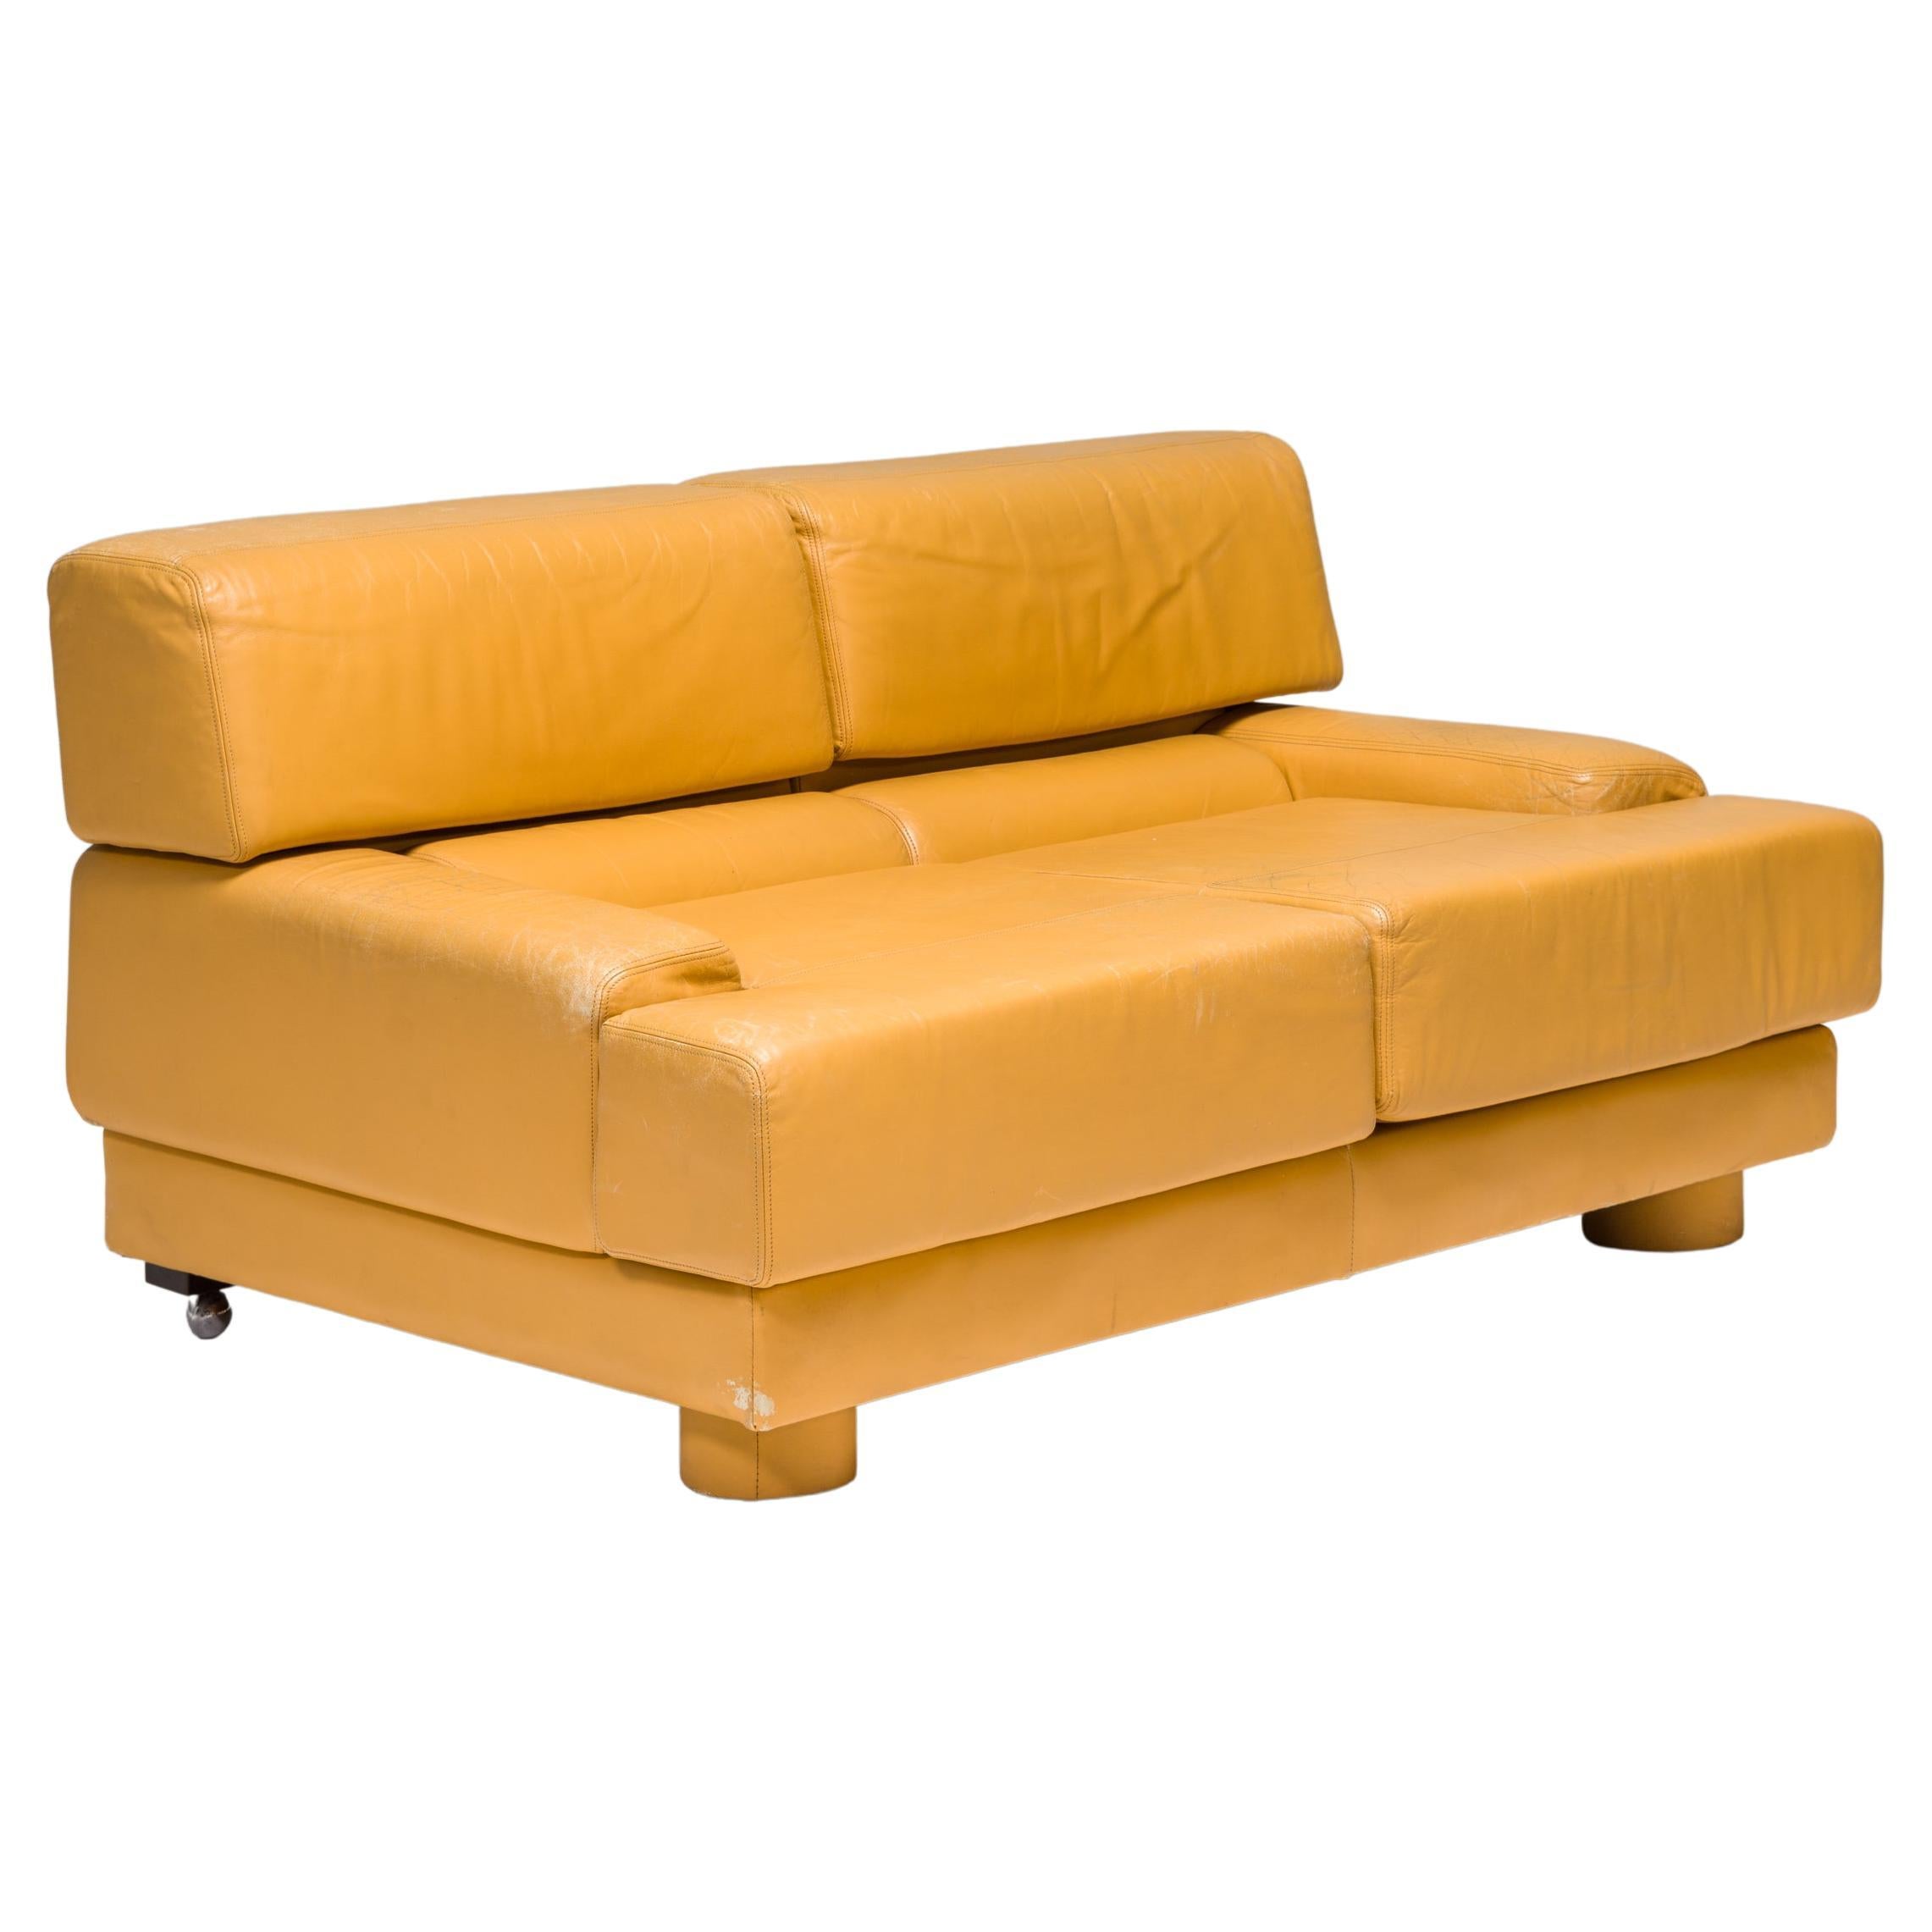 Gelbes Leder-Sofa mit 2 Sitzen von Percival Lafer, um 1960